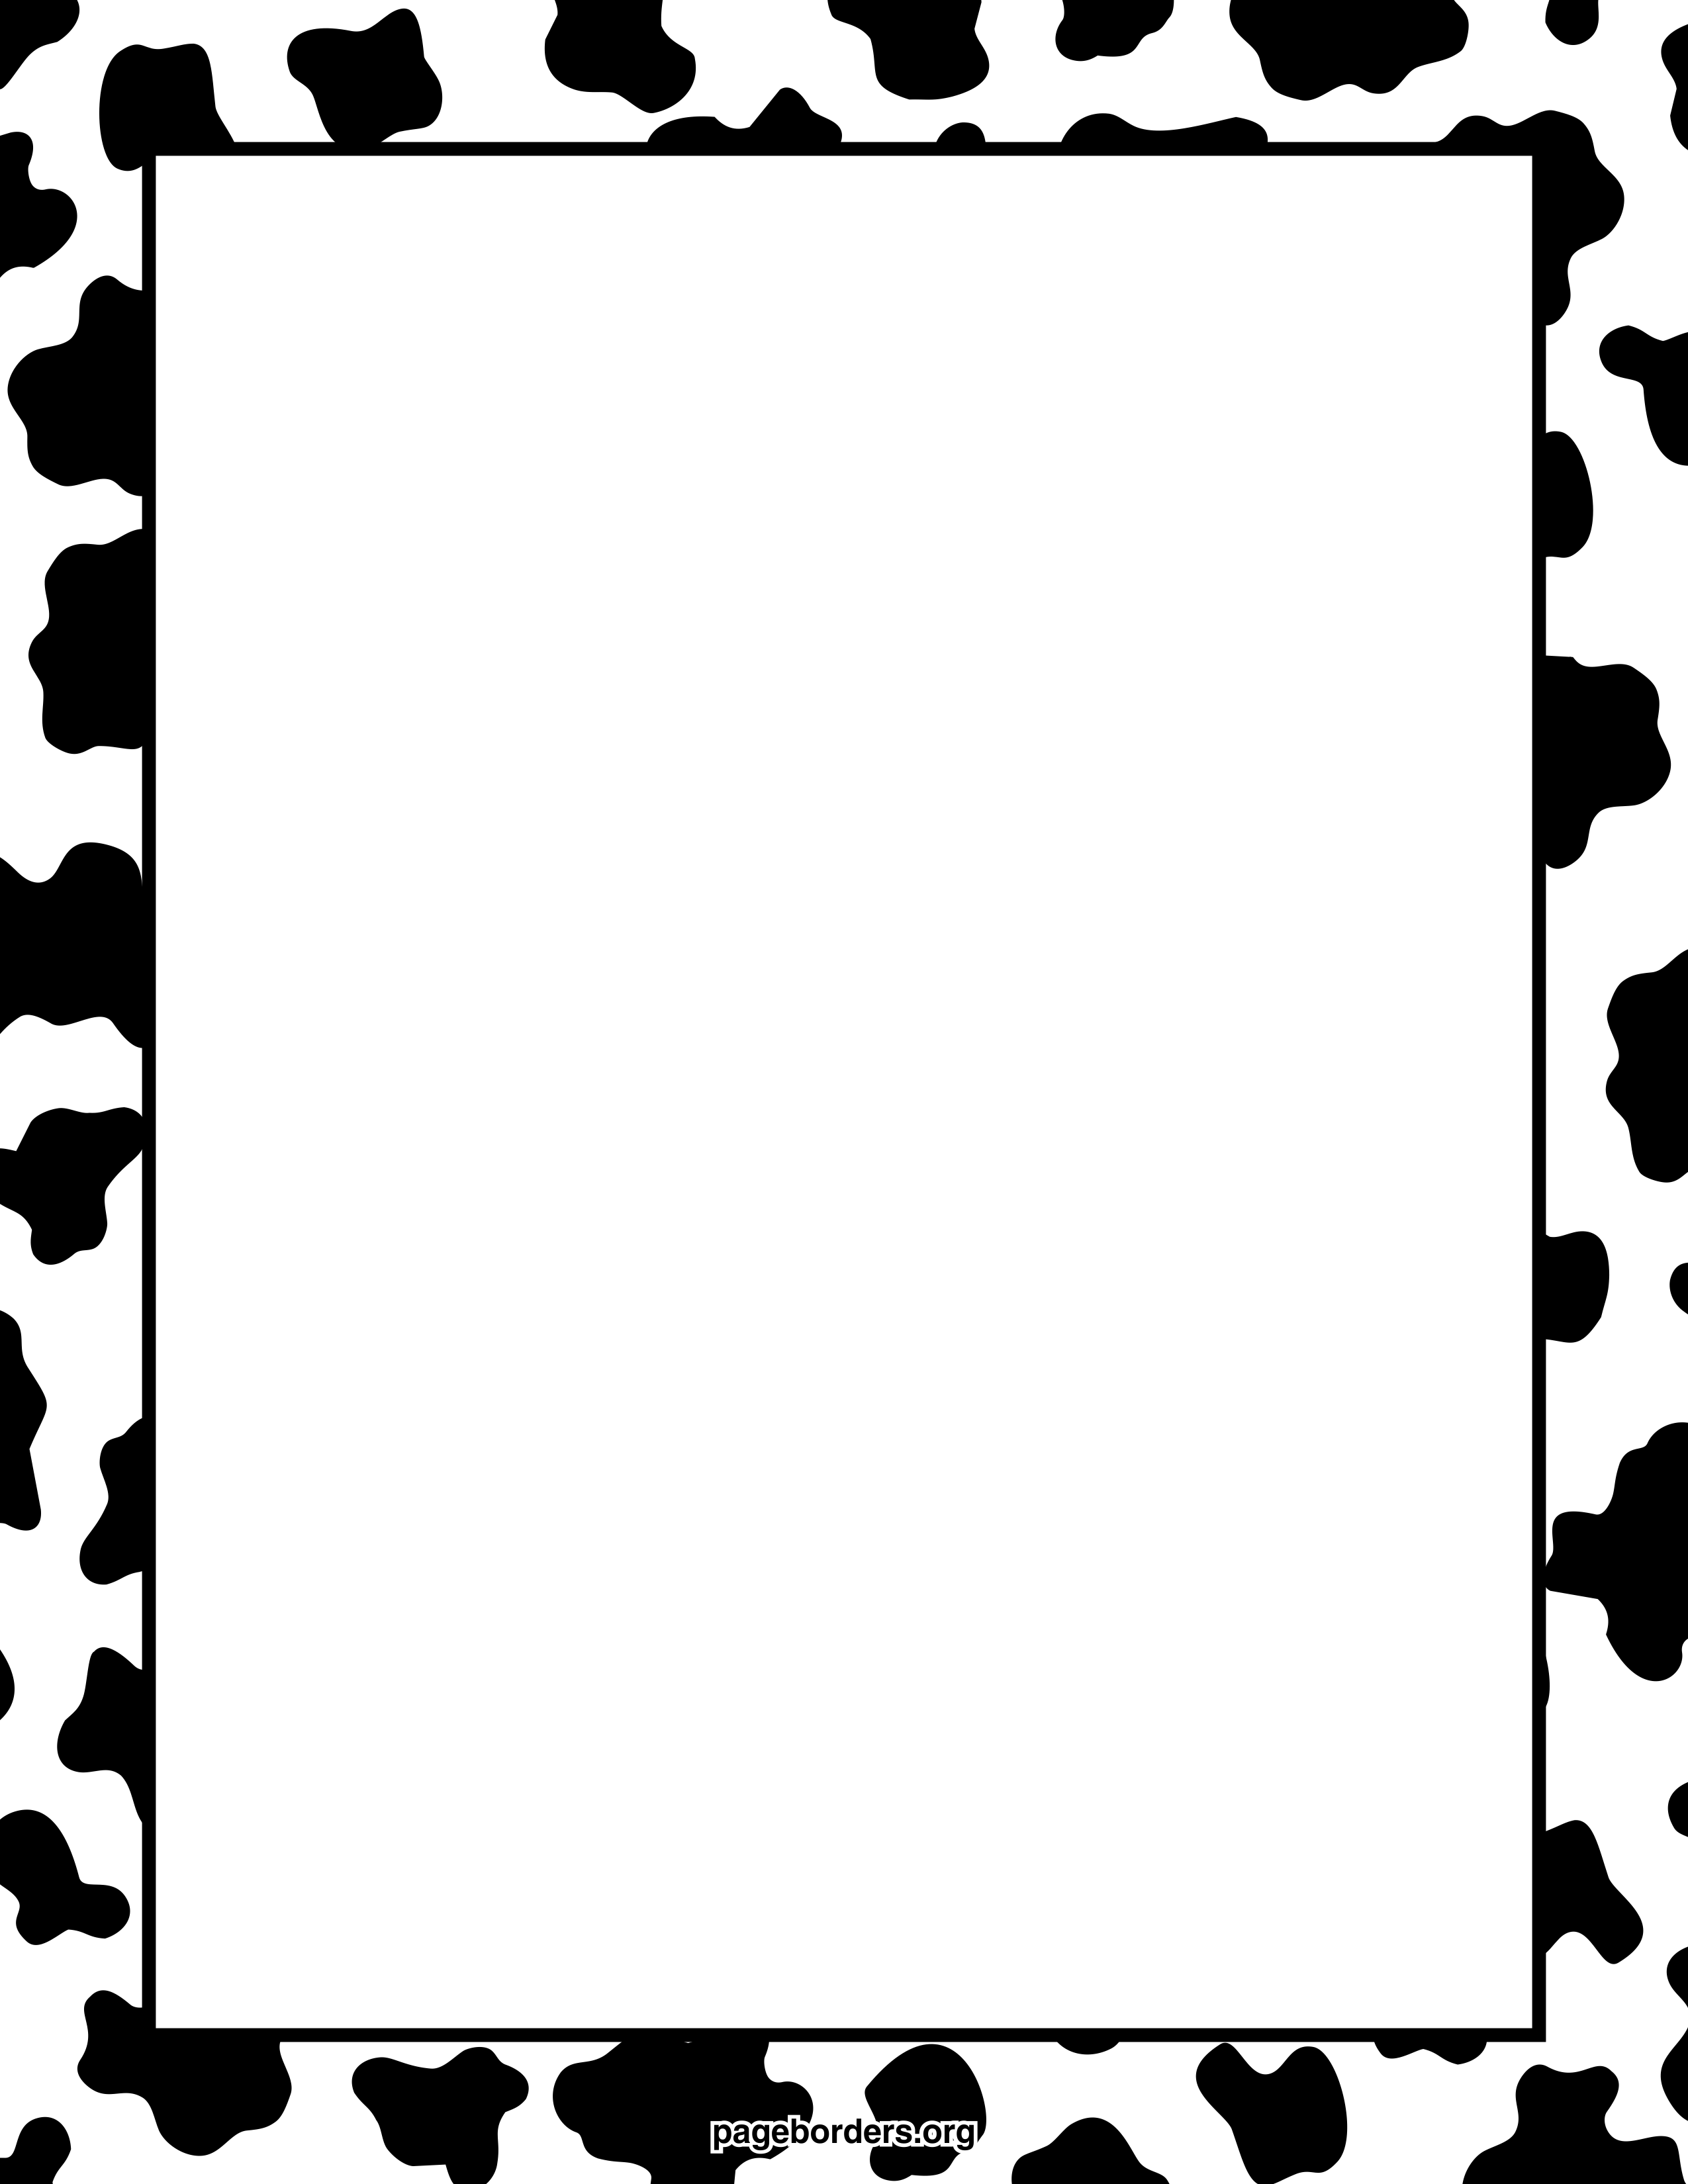 free clip art cow border - photo #1